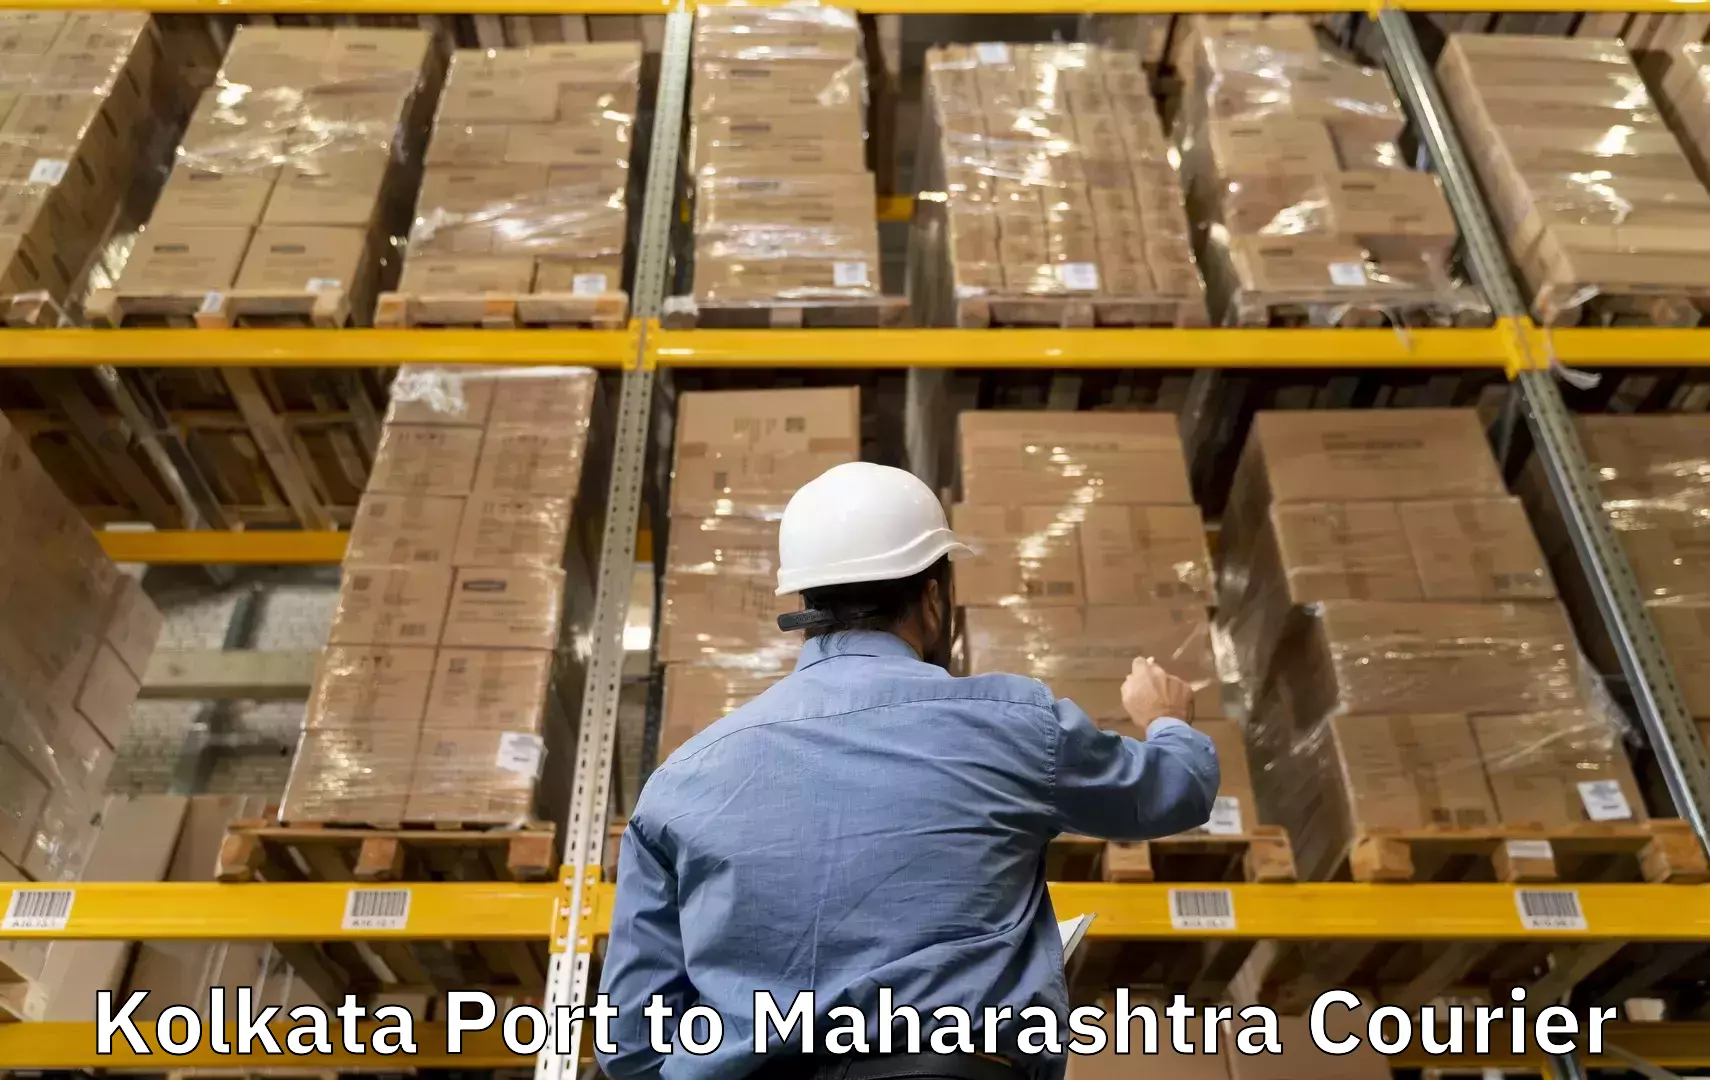 Luggage forwarding service in Kolkata Port to Mandrup